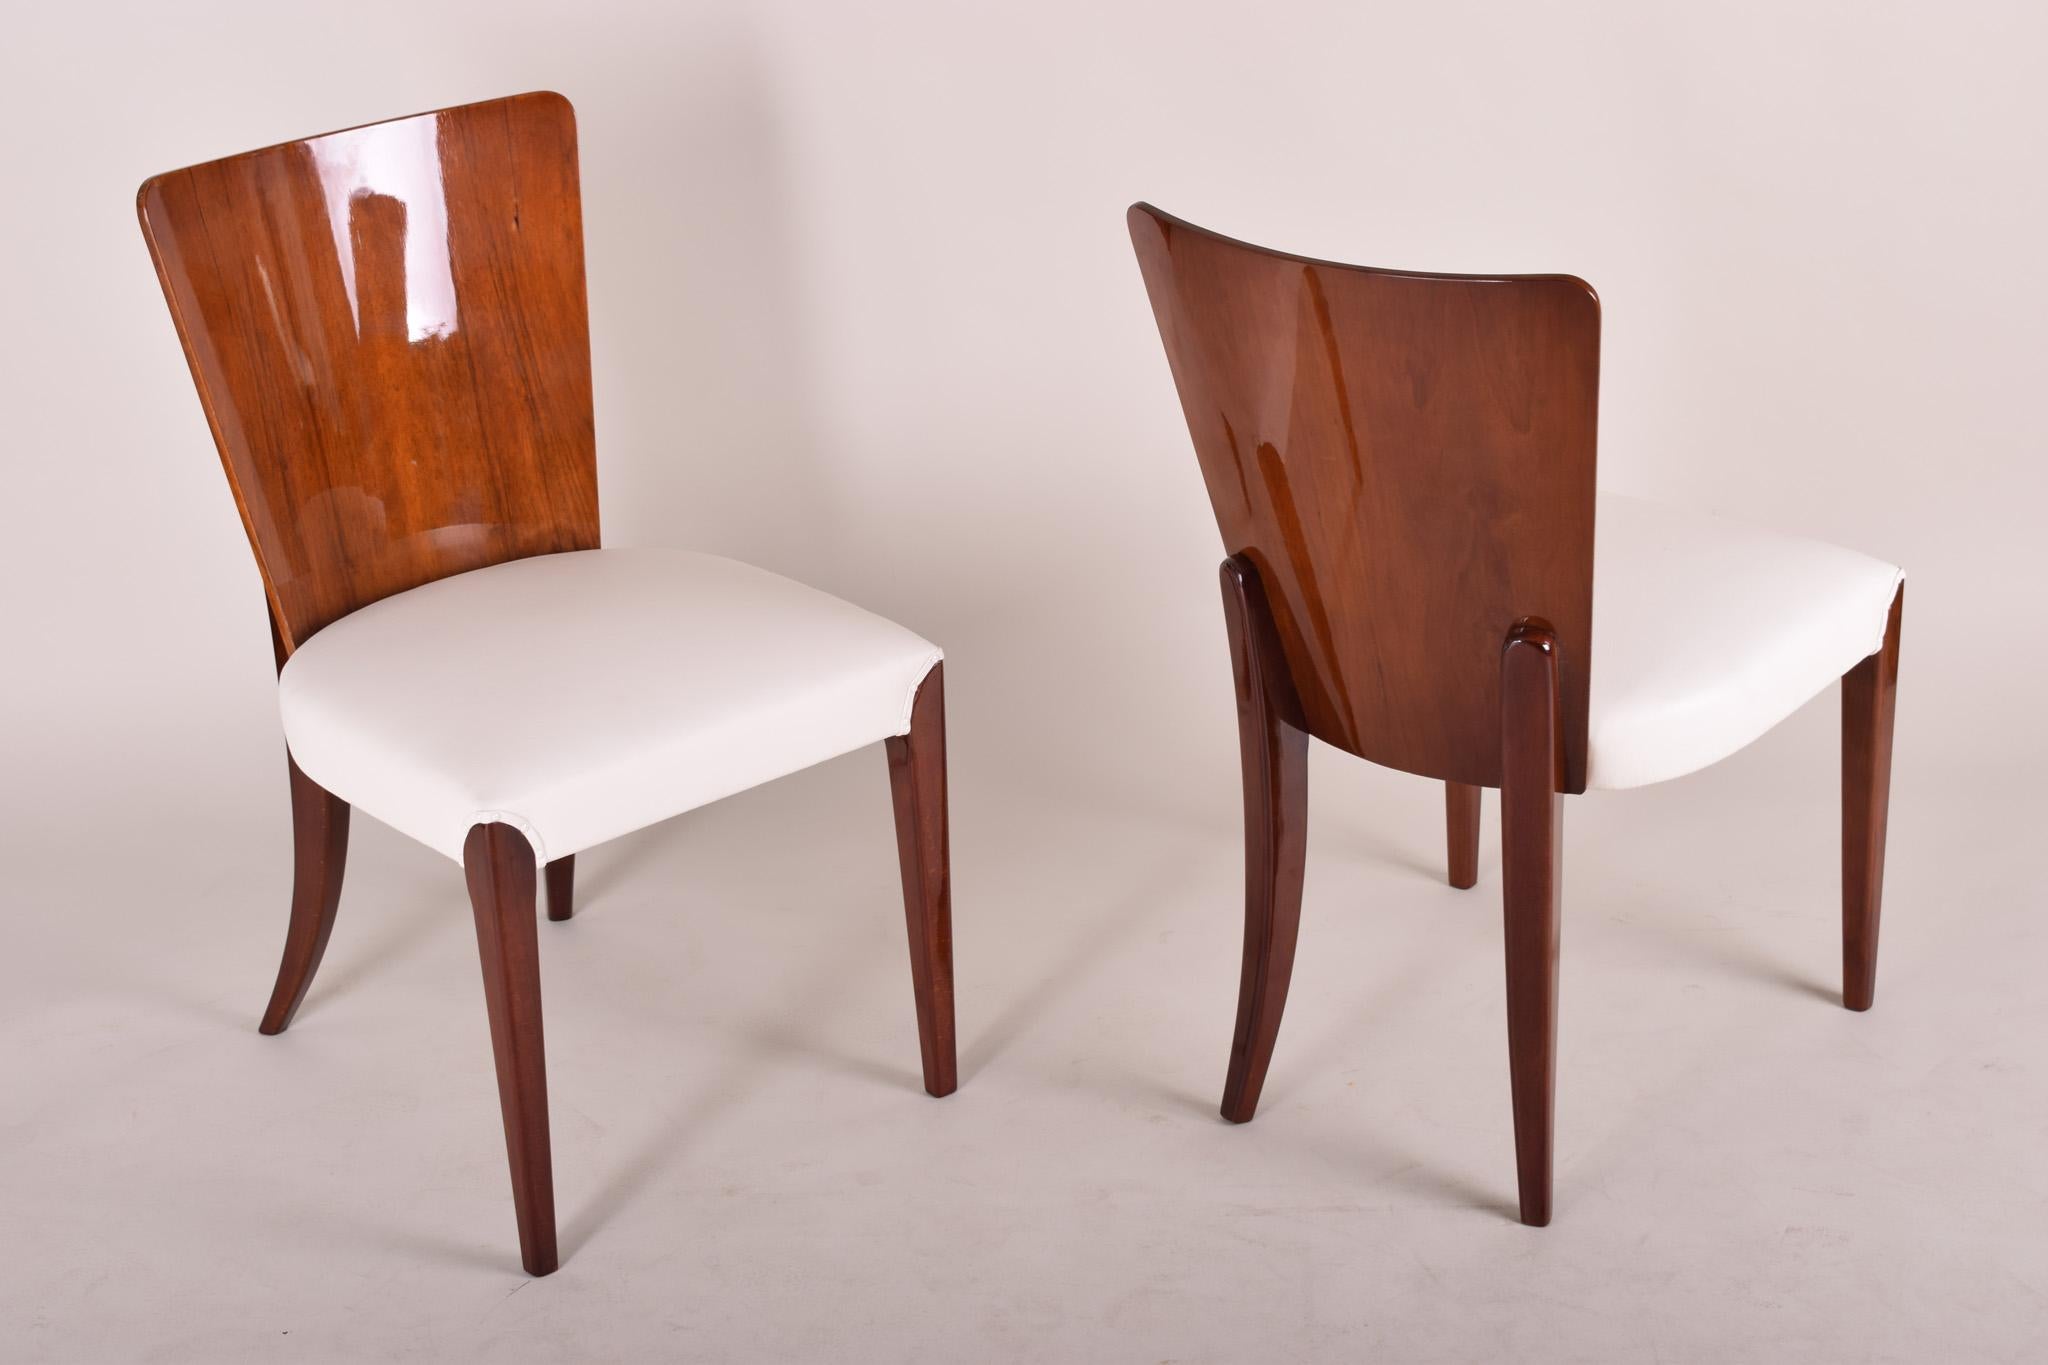 Leather Czech Art Deco Chairs, Six Pieces, Designed by Jindrich Halabala, 1940-1949